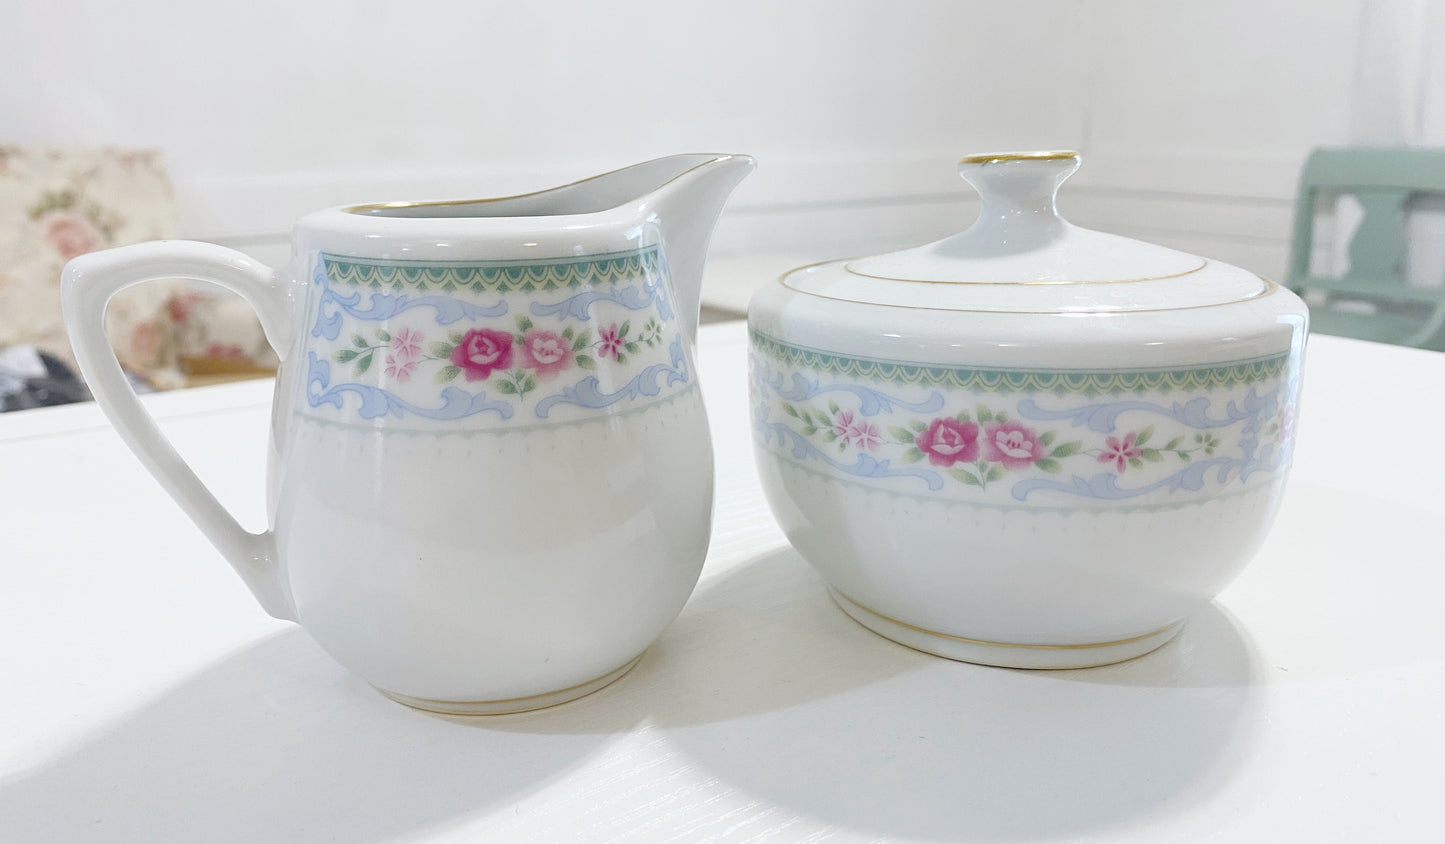 Floral sugar bowl and creamer set